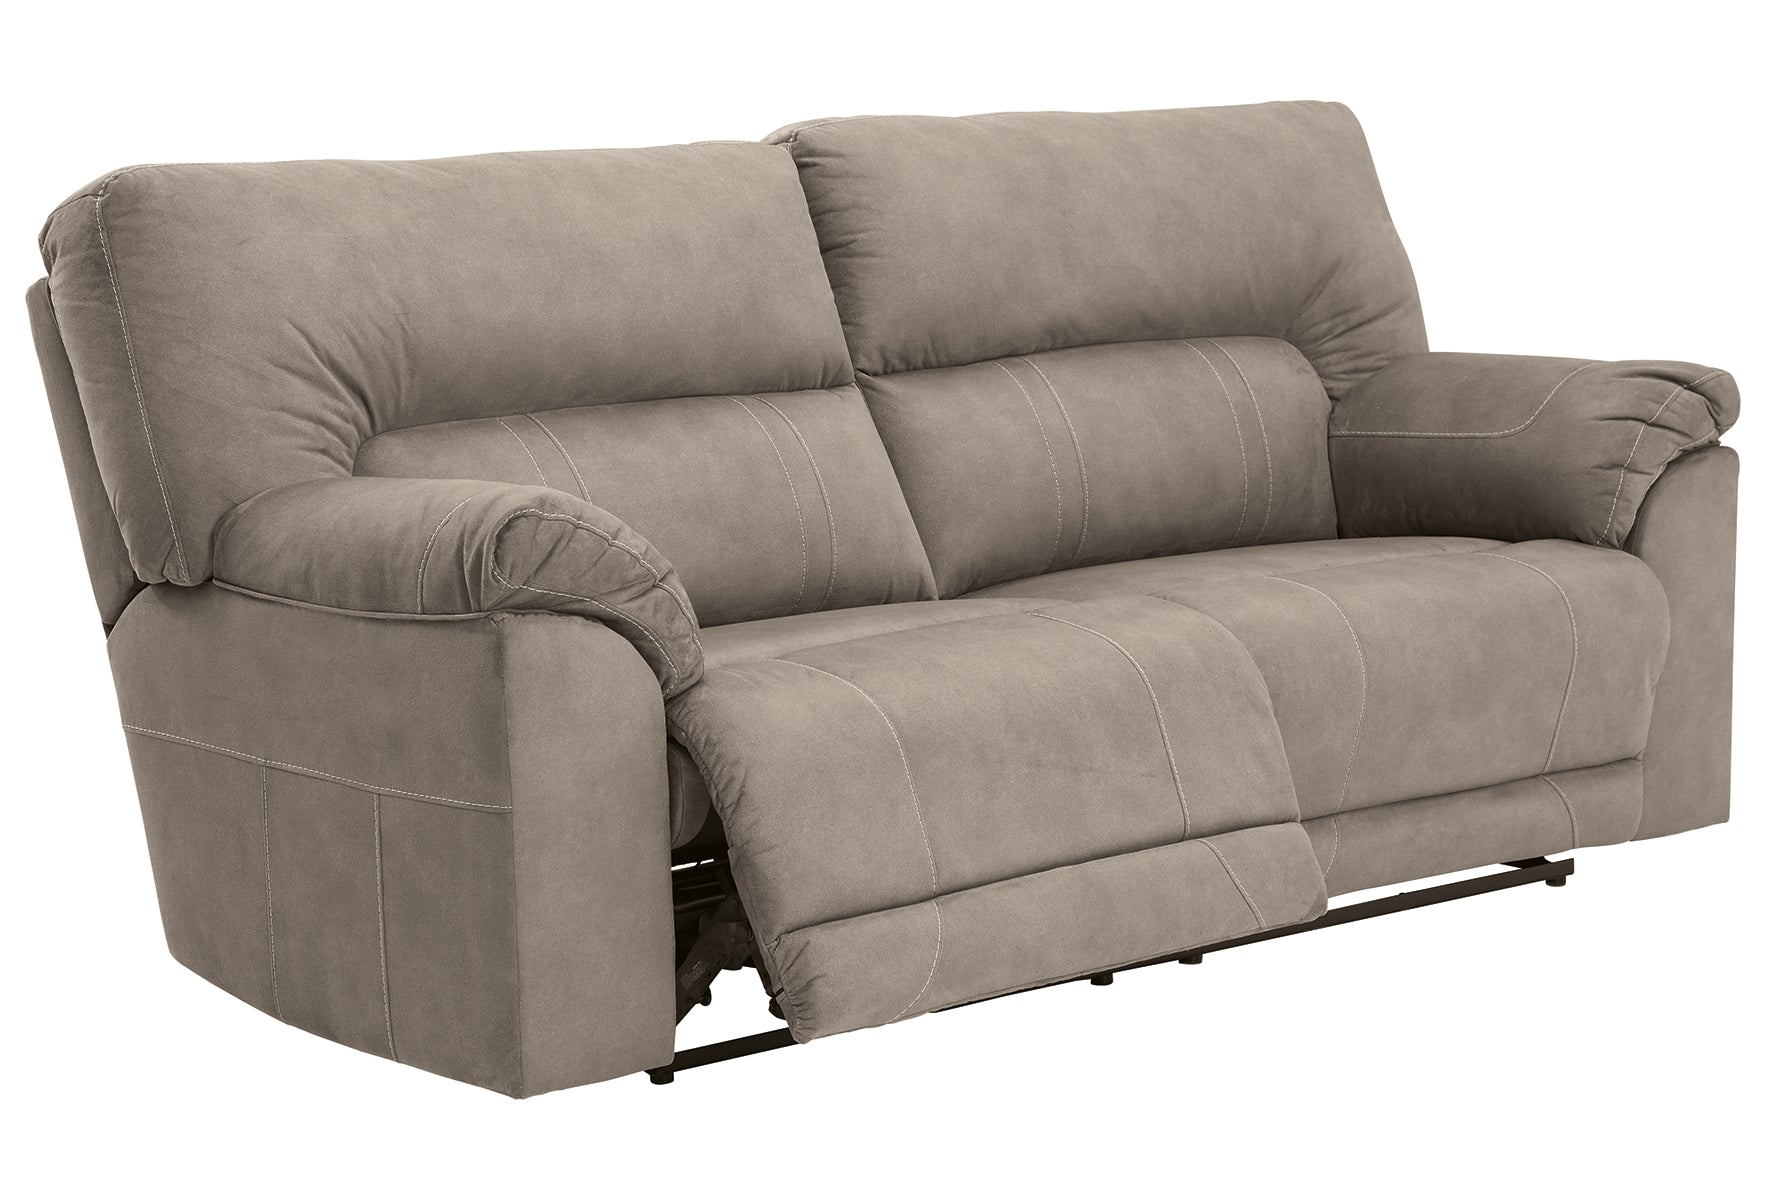 Cavalcade Reclining Sofa